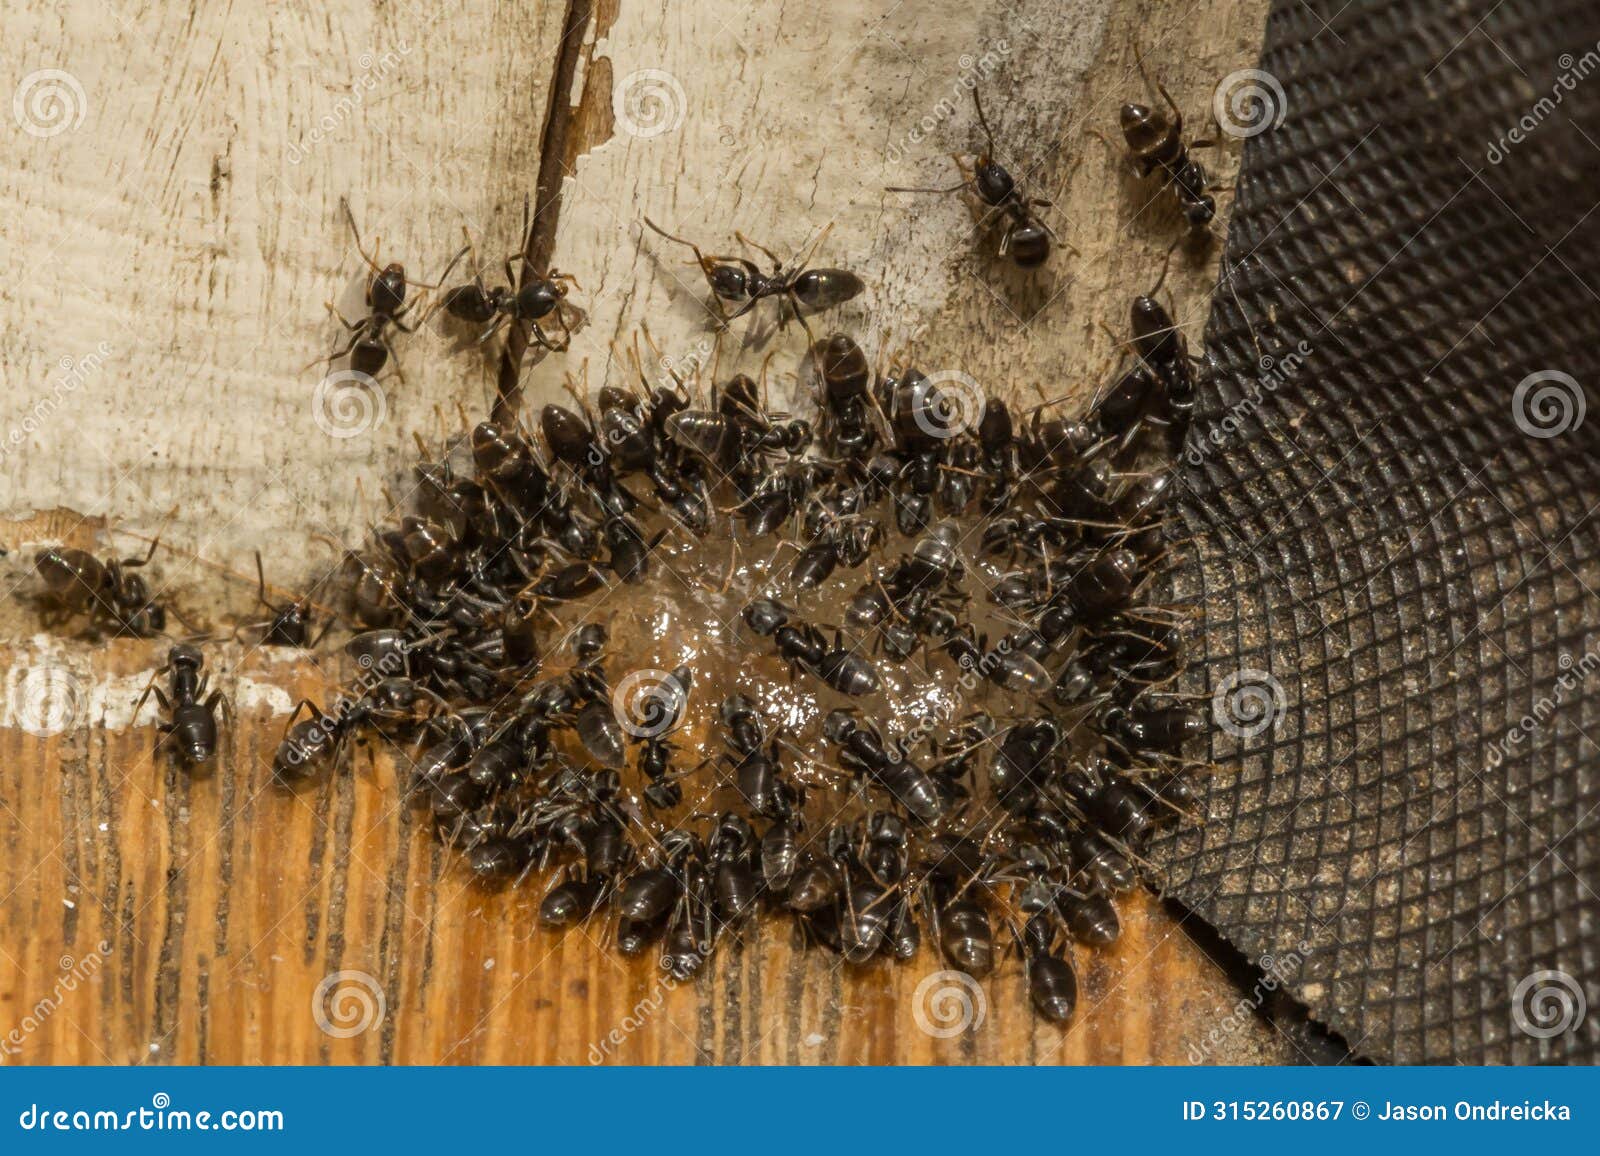 odorous house ants feeding on ant gel bait